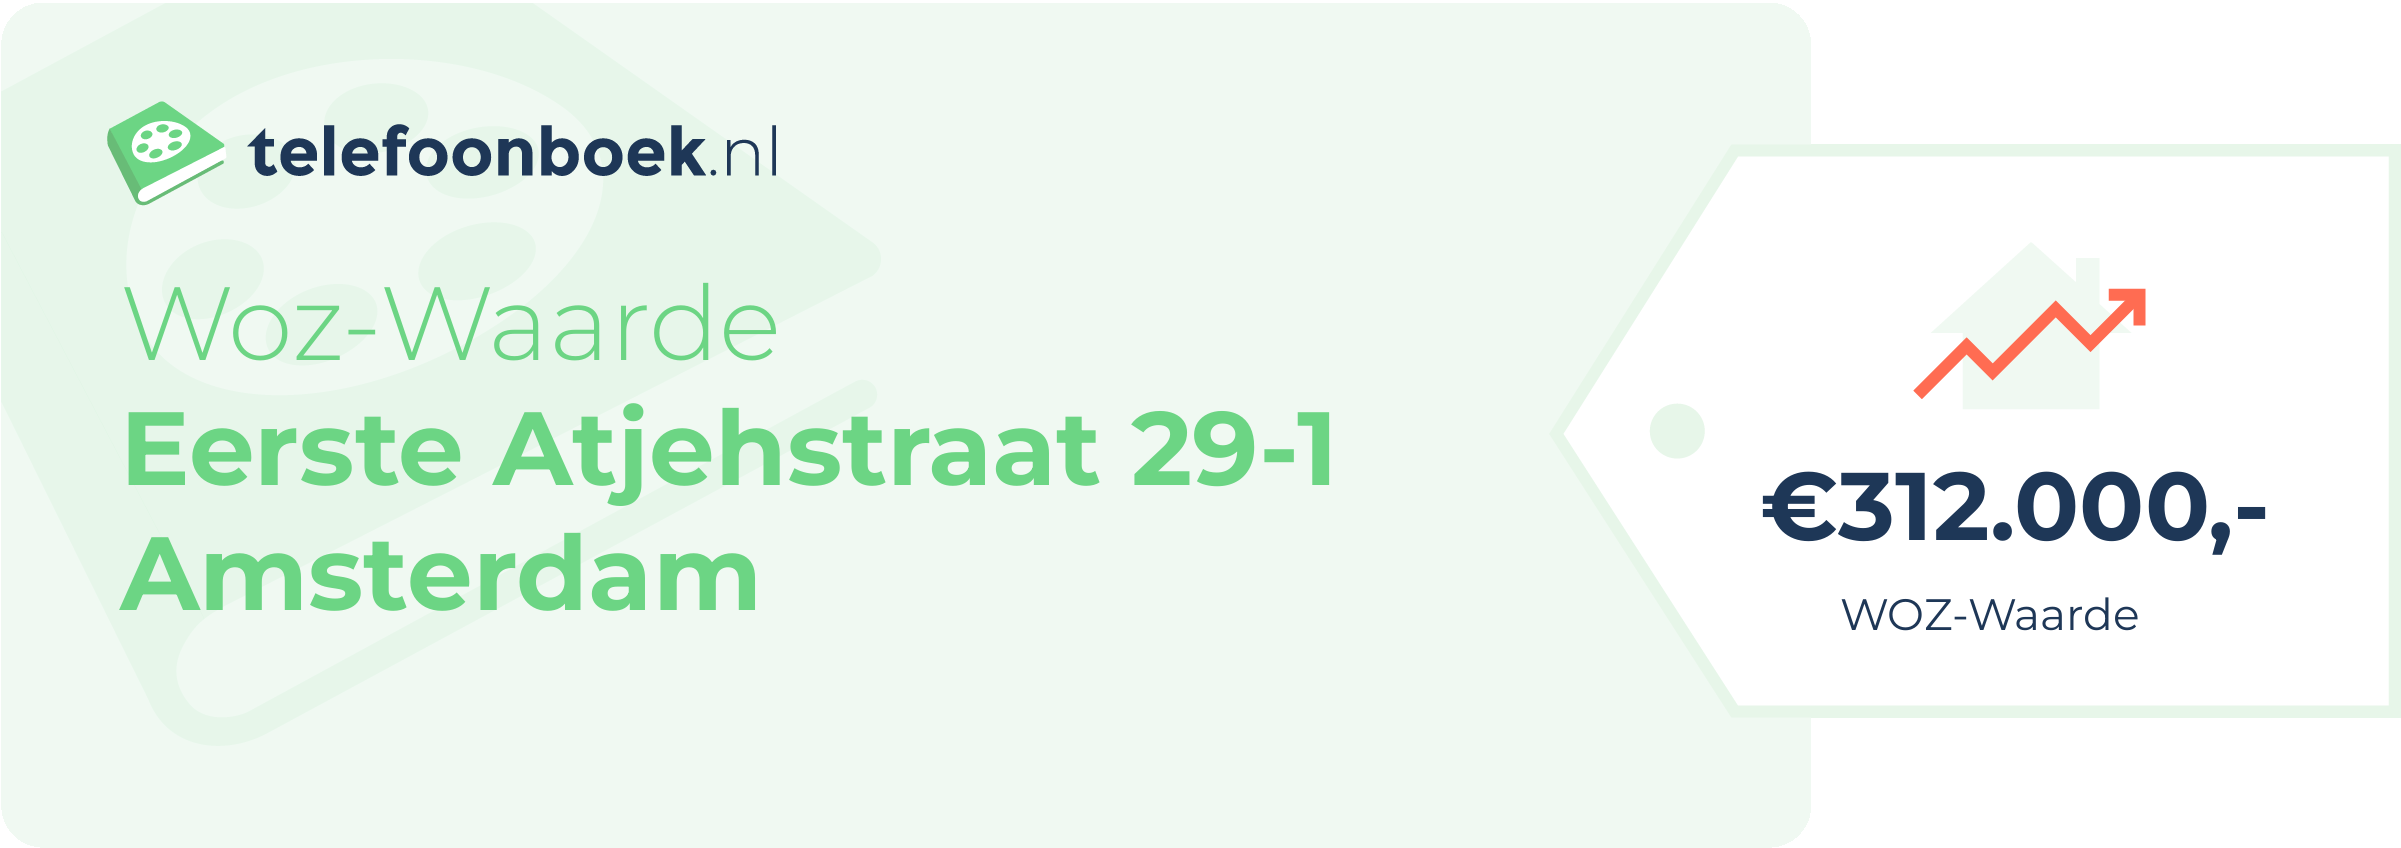 WOZ-waarde Eerste Atjehstraat 29-1 Amsterdam